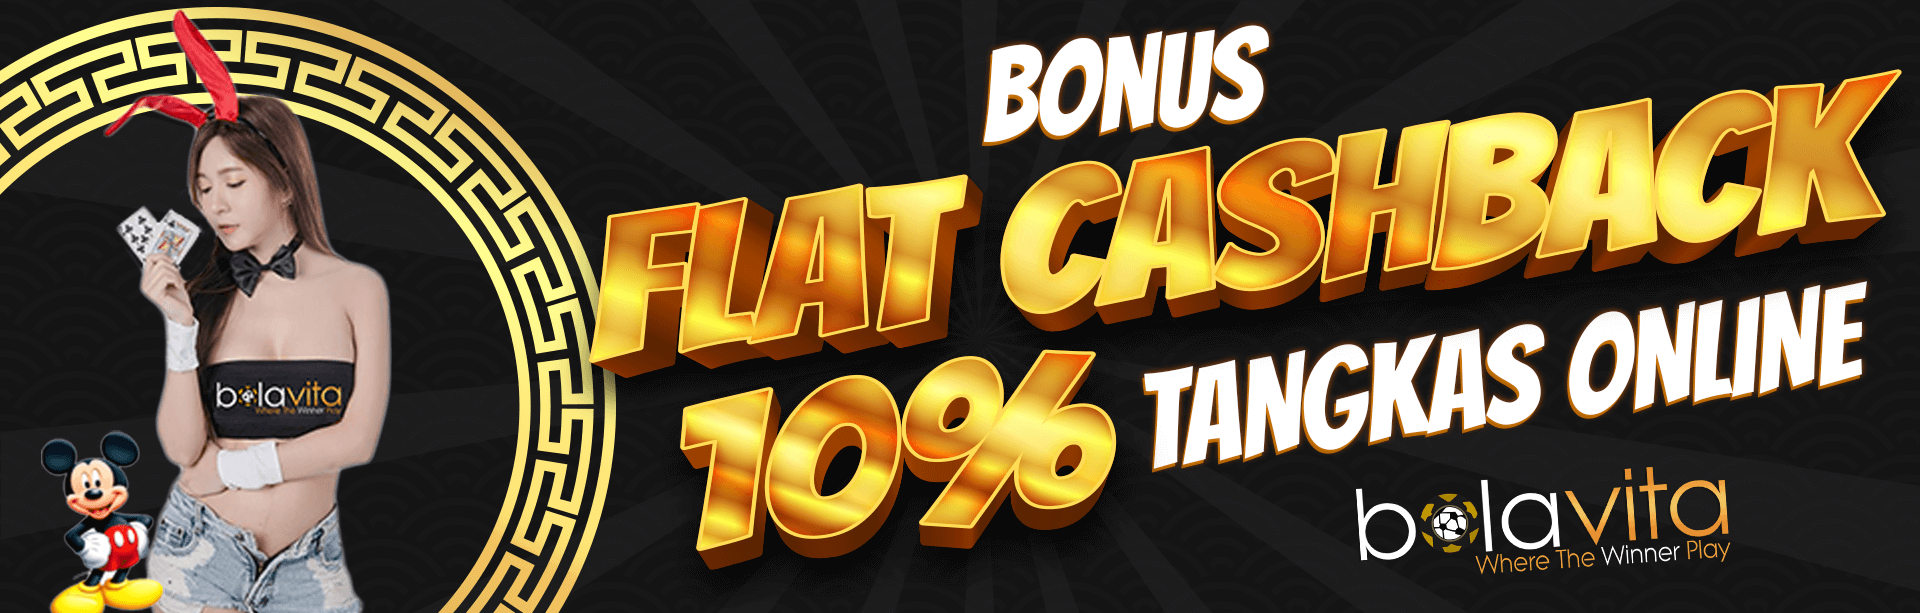 Bonus Cashback 10% Tangkas Online Flat